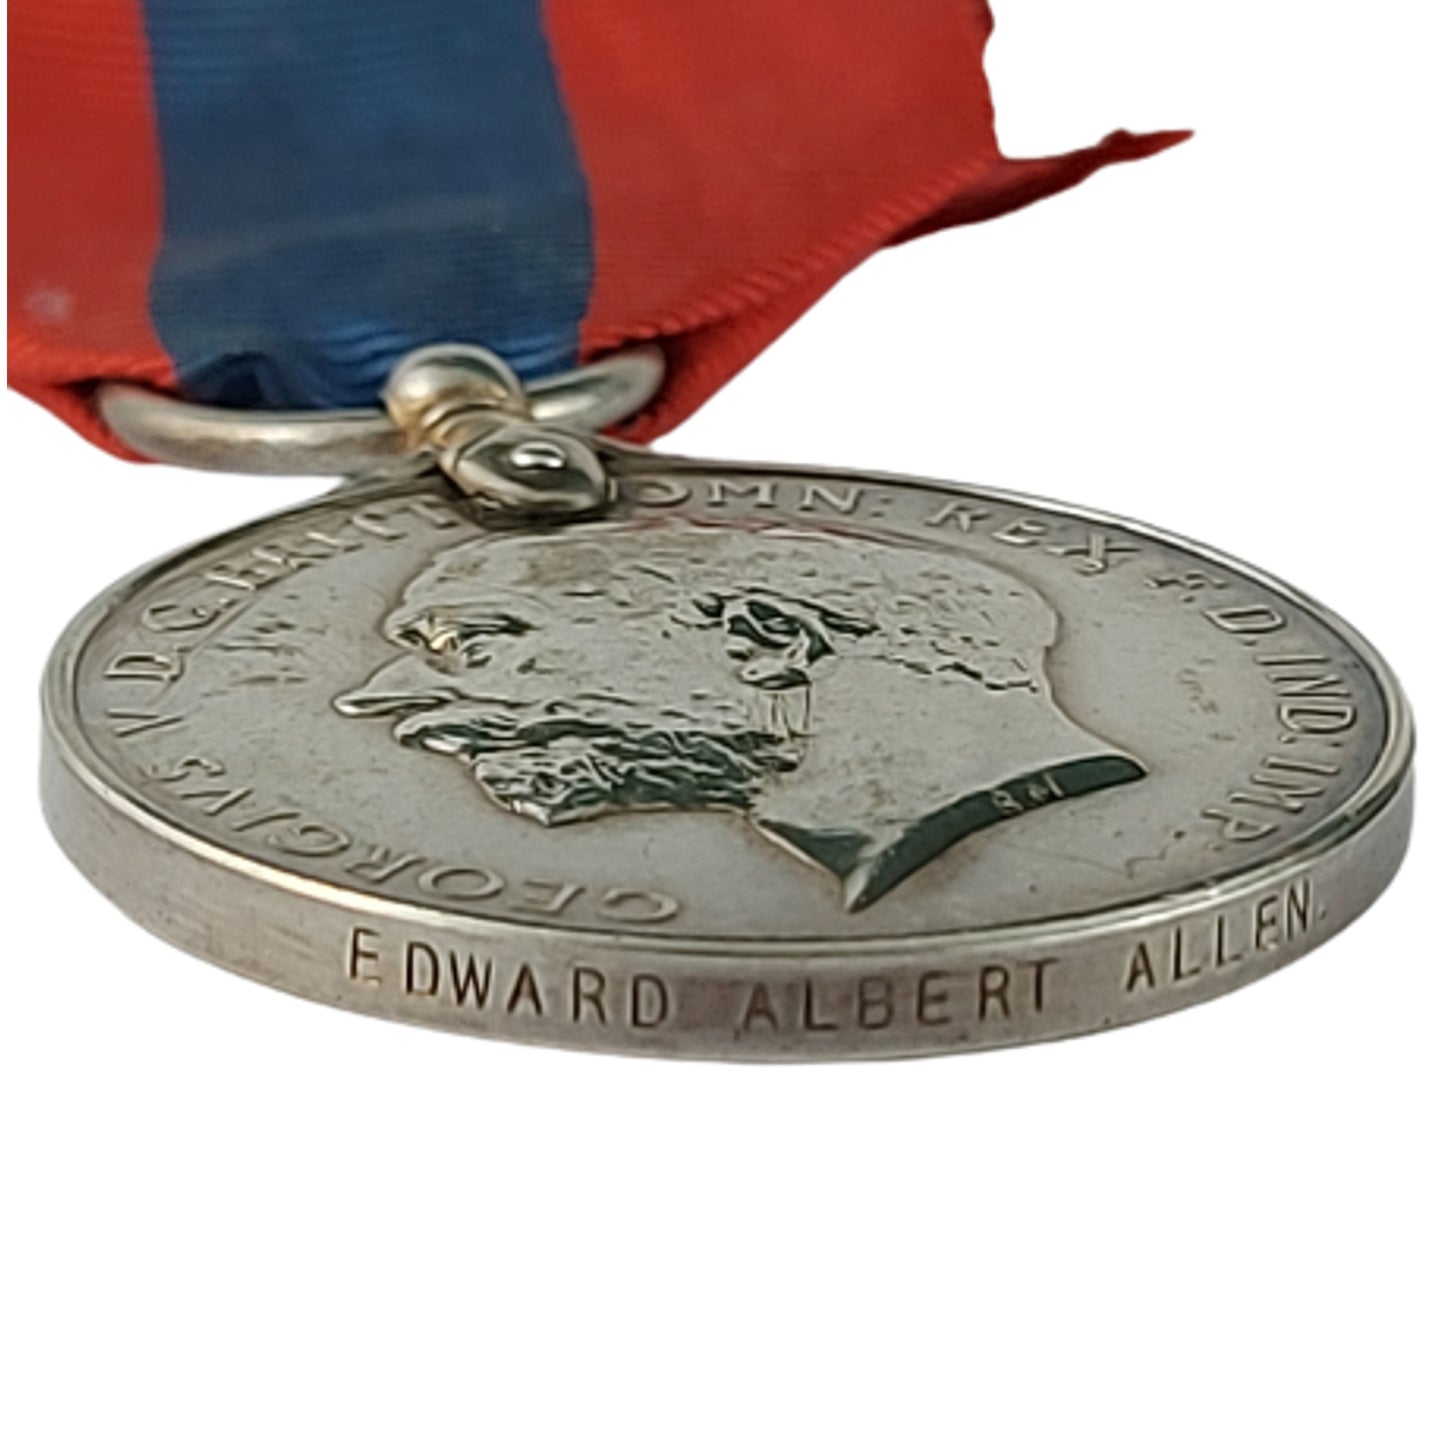 WW1 George V Imperial Service Medal